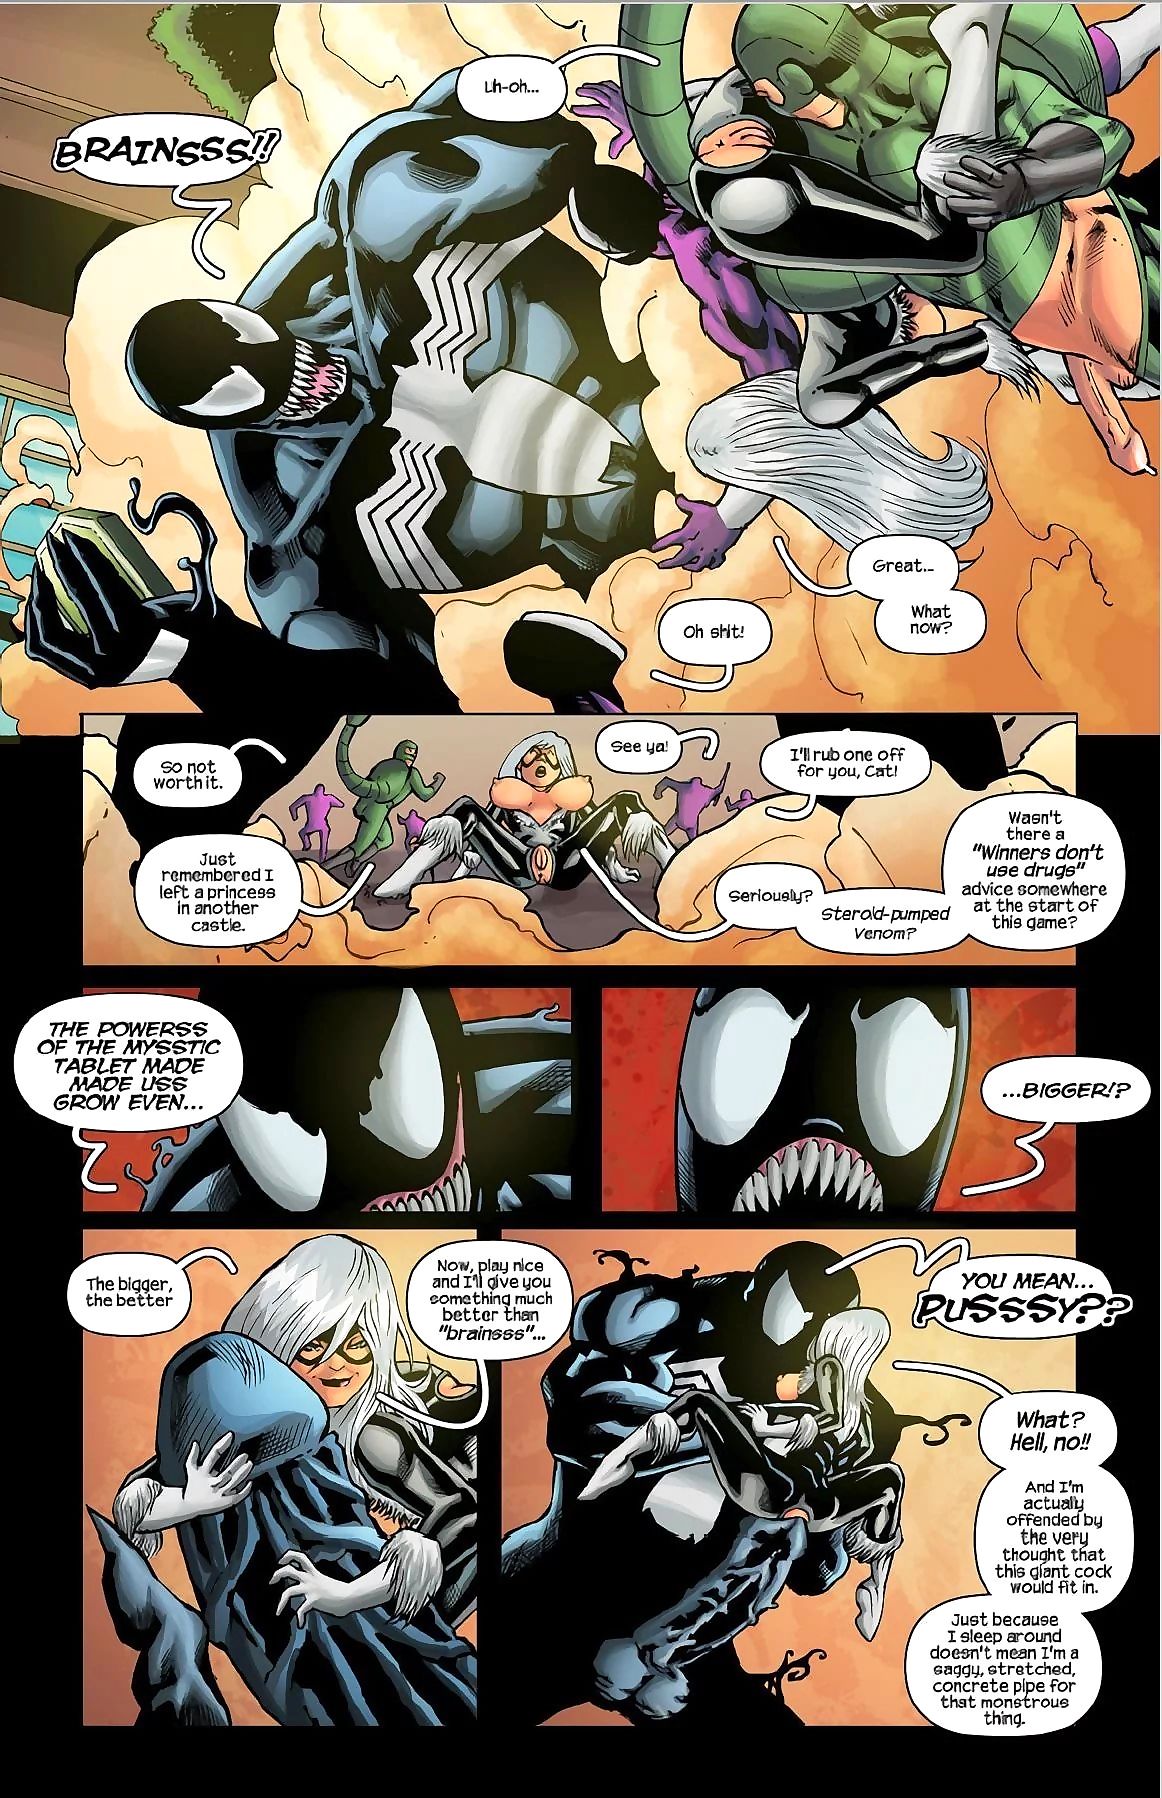 ट्रेसी scops spiderman, के ’91 आर्केड खेल page 1